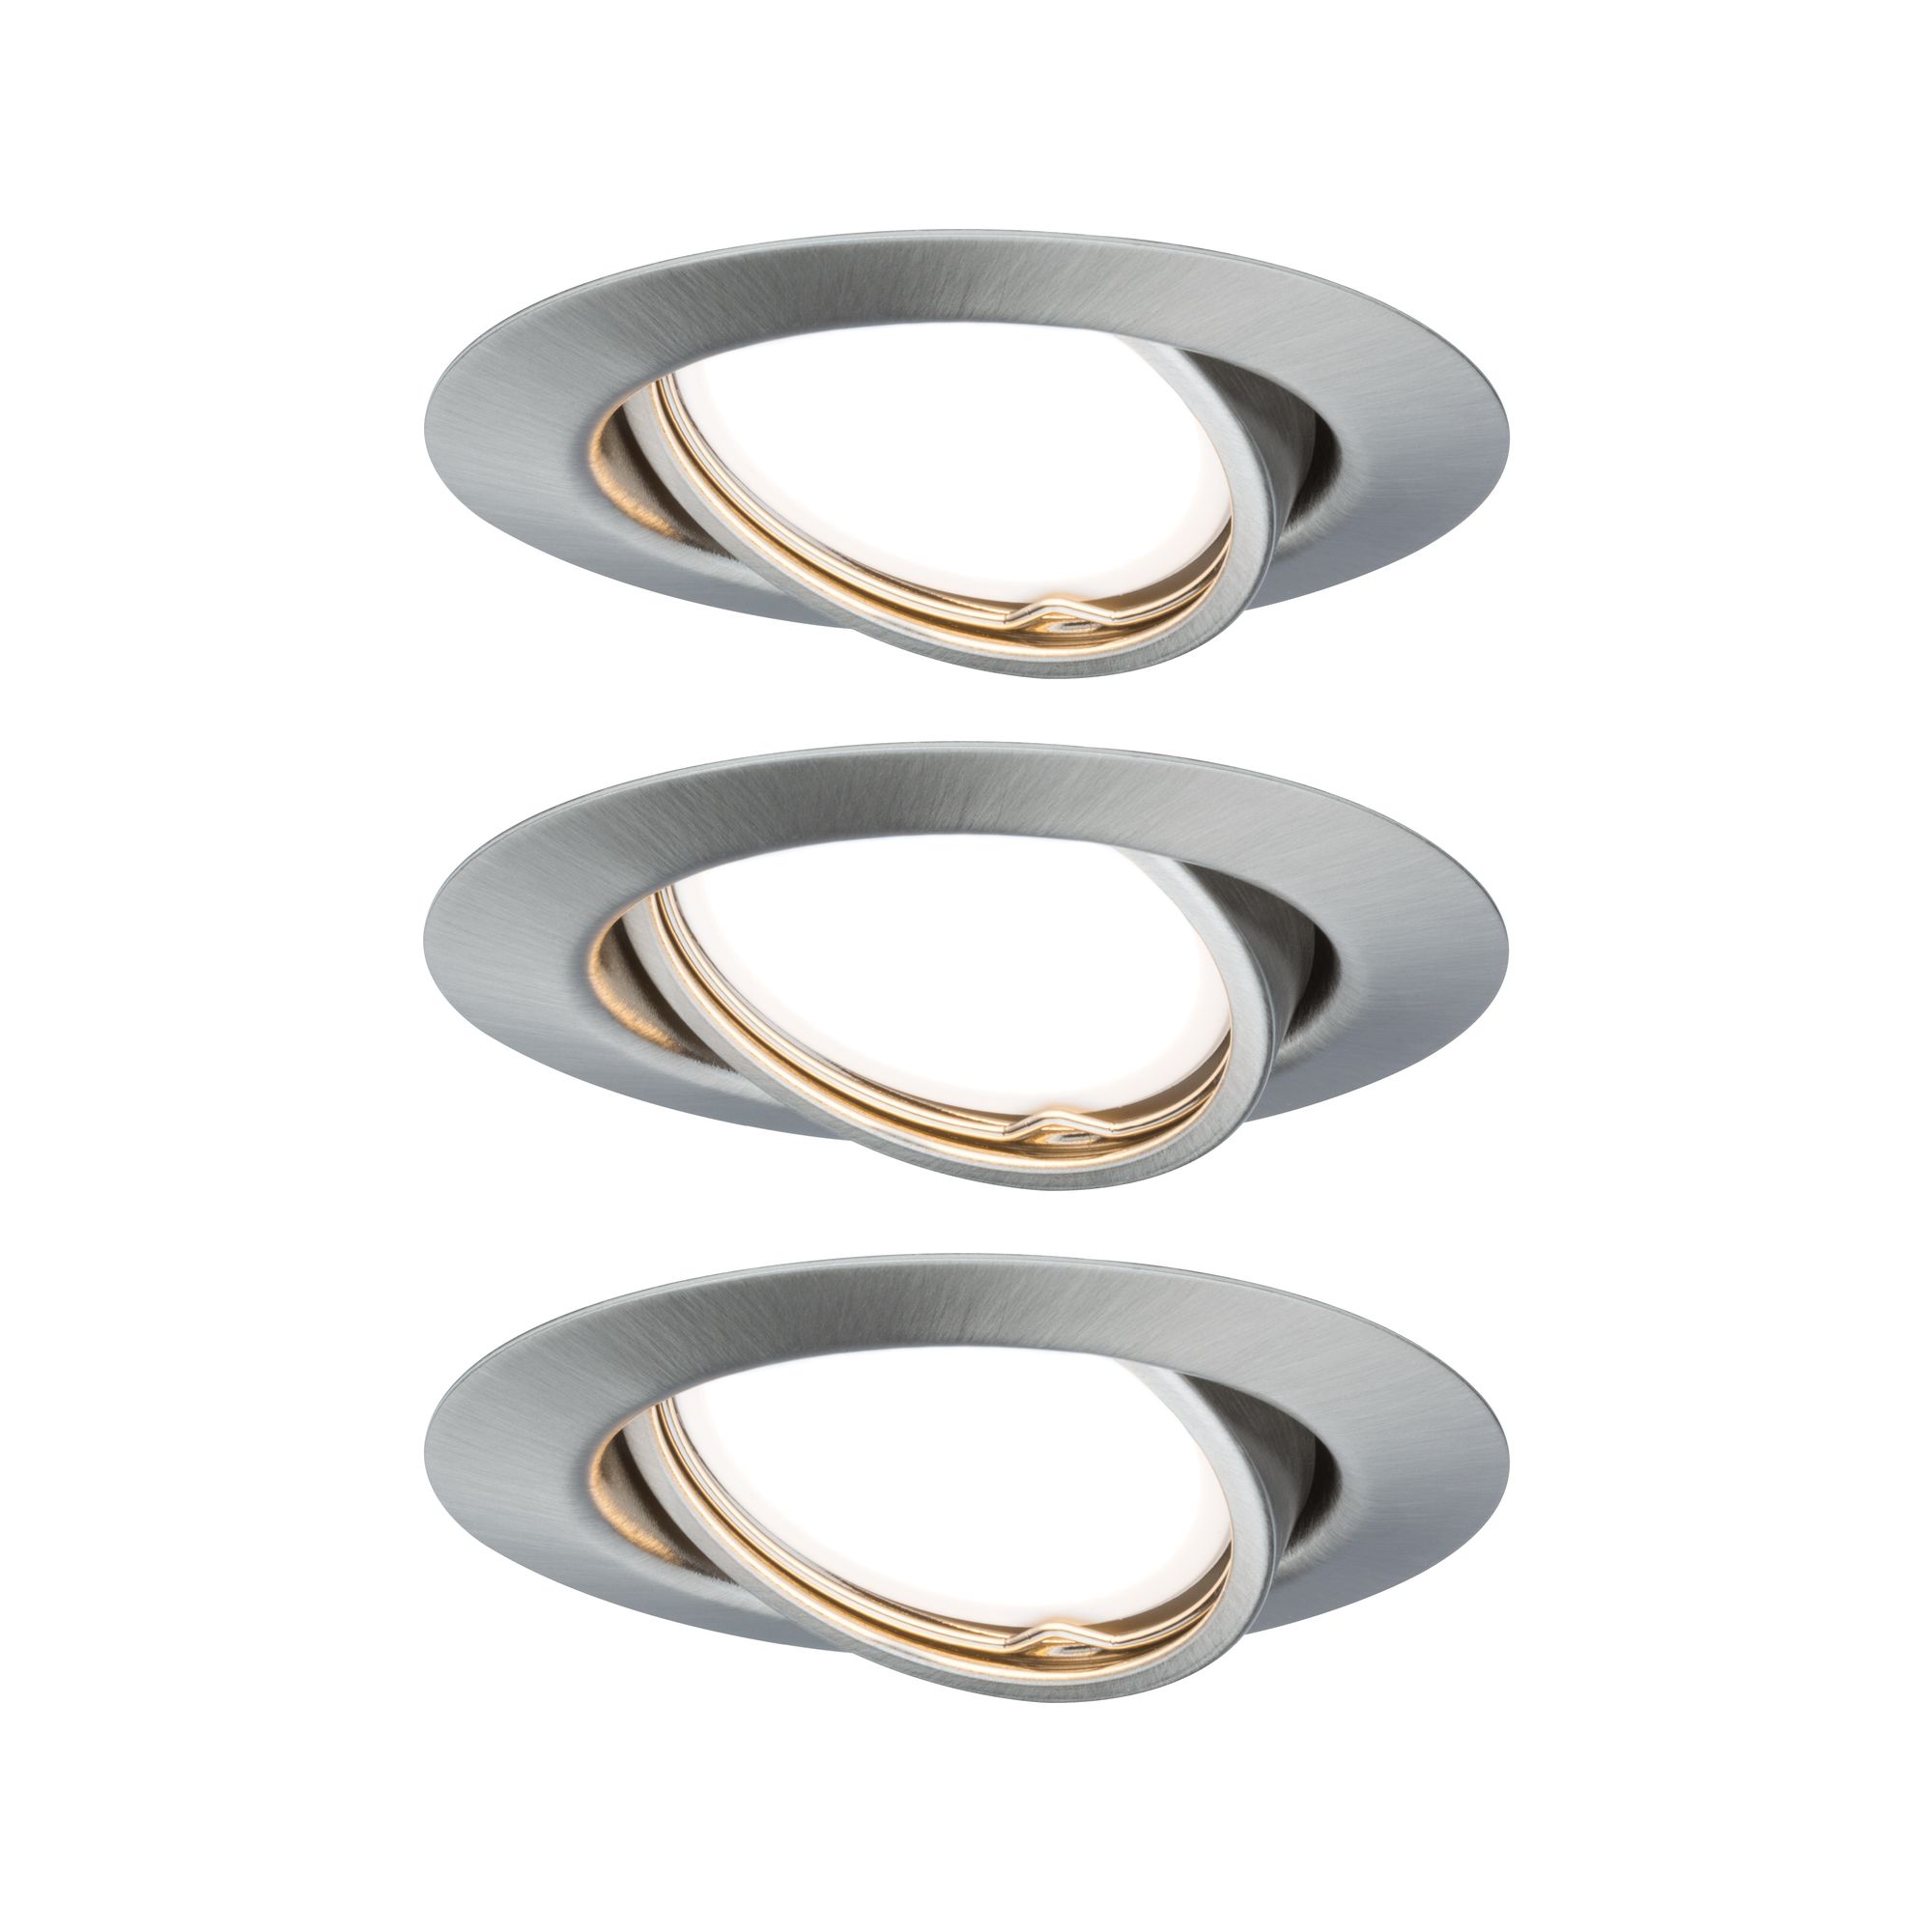 PAULMANN - Vestavné svítidlo LED Base kruhové 3x5W GU10 kov kartáčovaný nastavitelné, P 93420